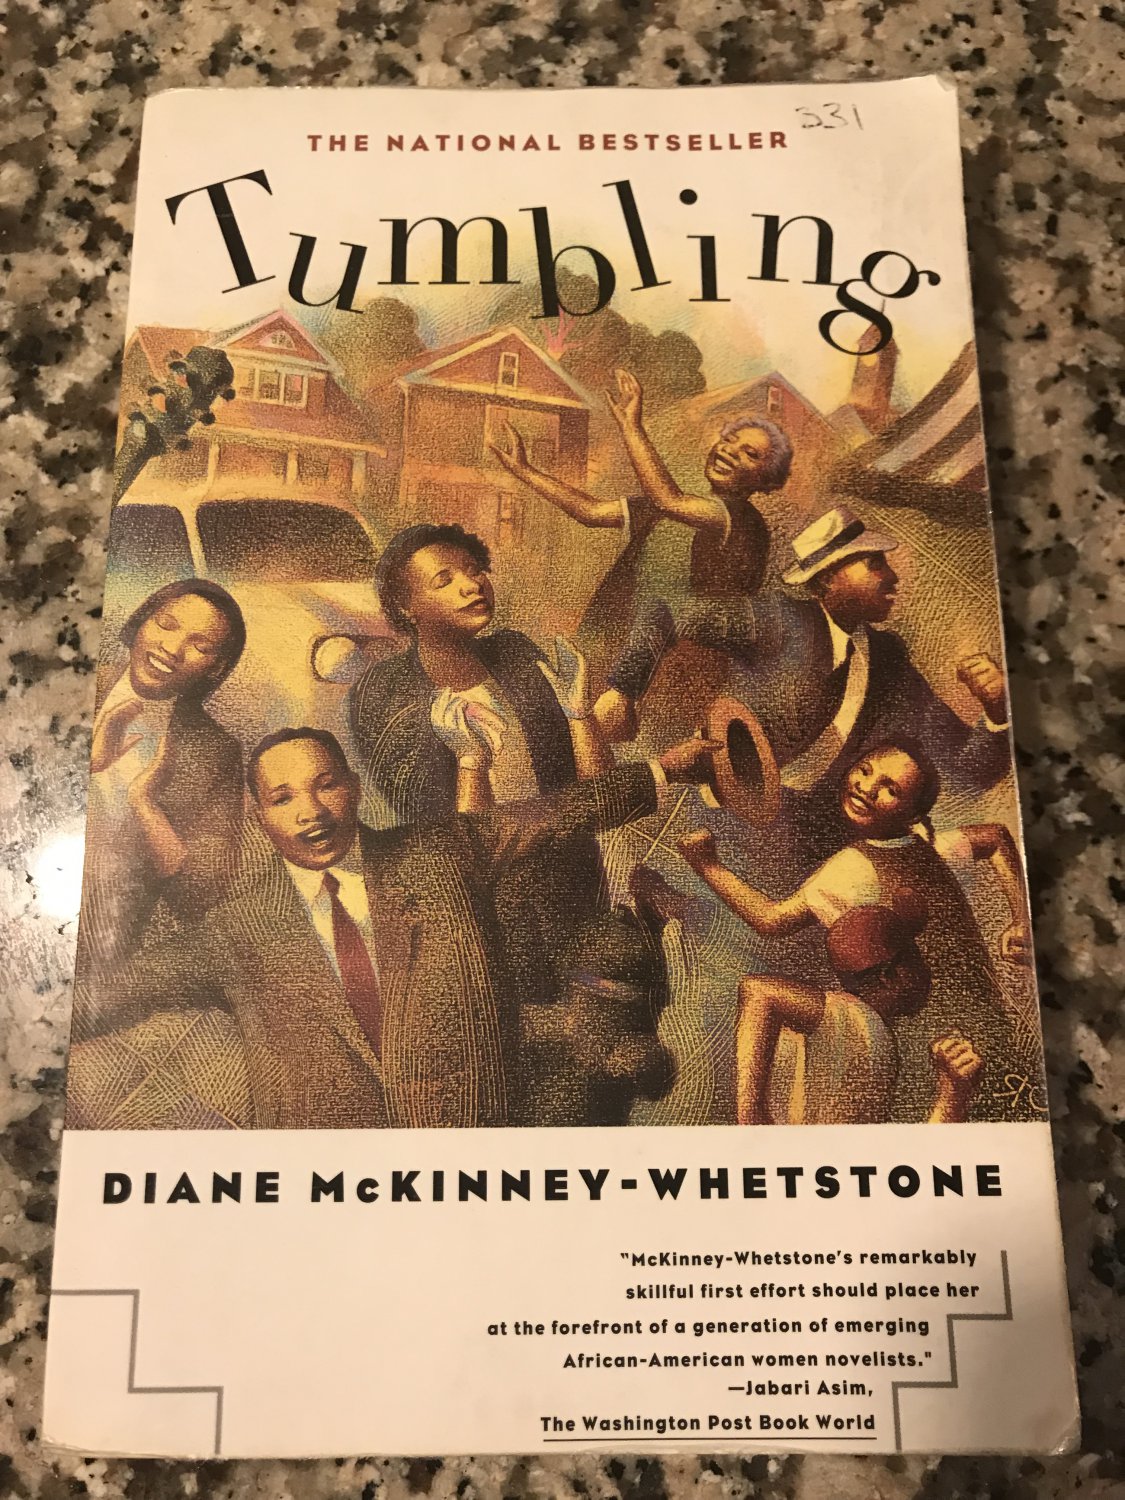 Tumbling by Diane McKinney-Whetstone